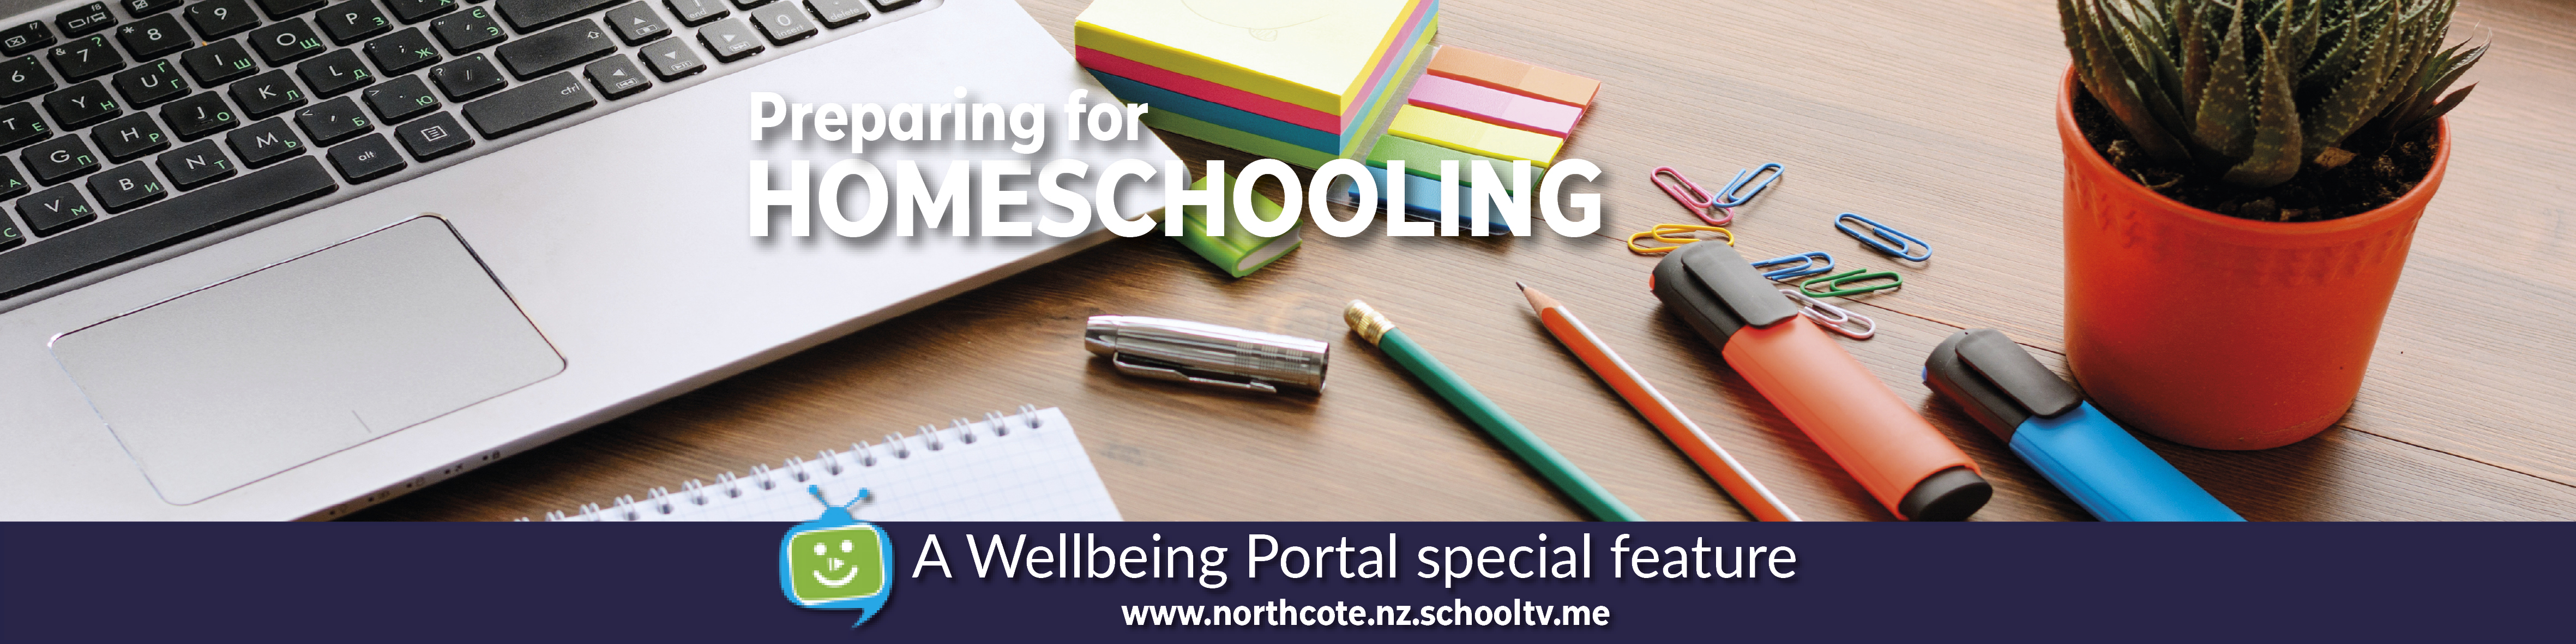 Level 3 homeschooling - wellbeing portal 